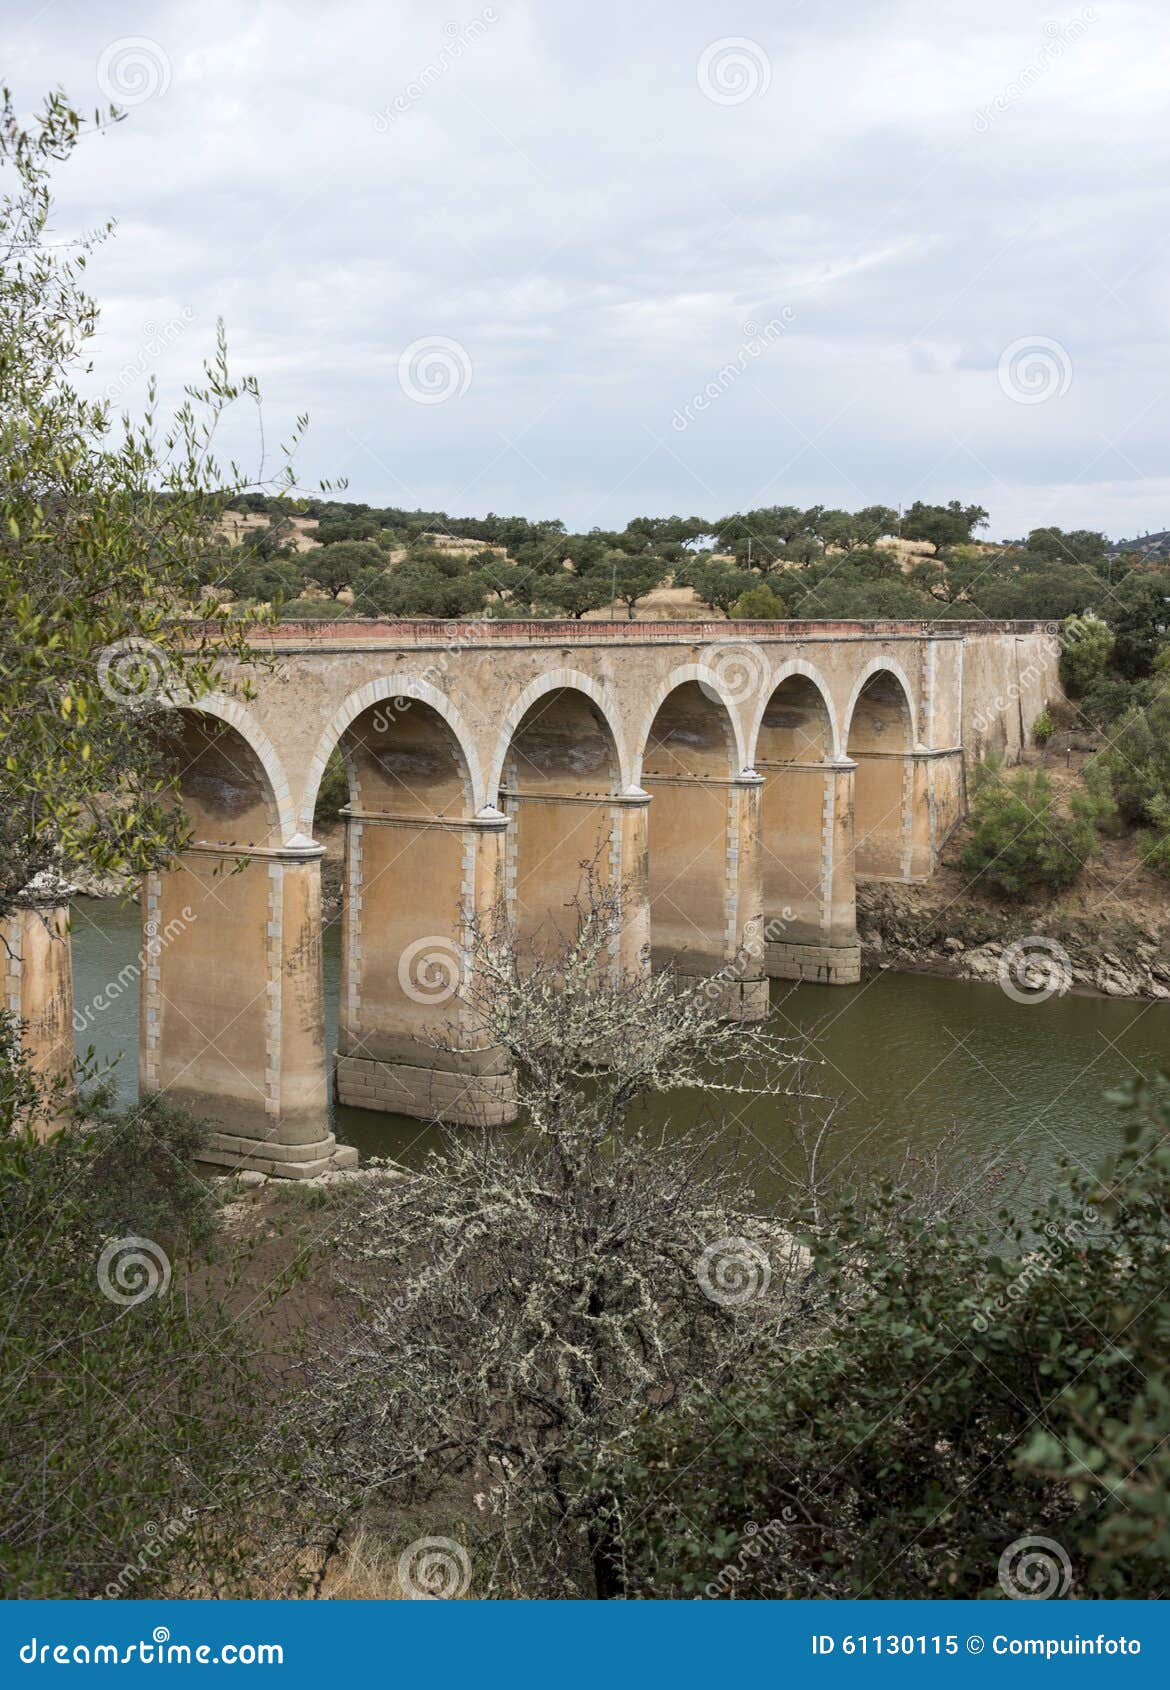 ponte de ardilla in portugal